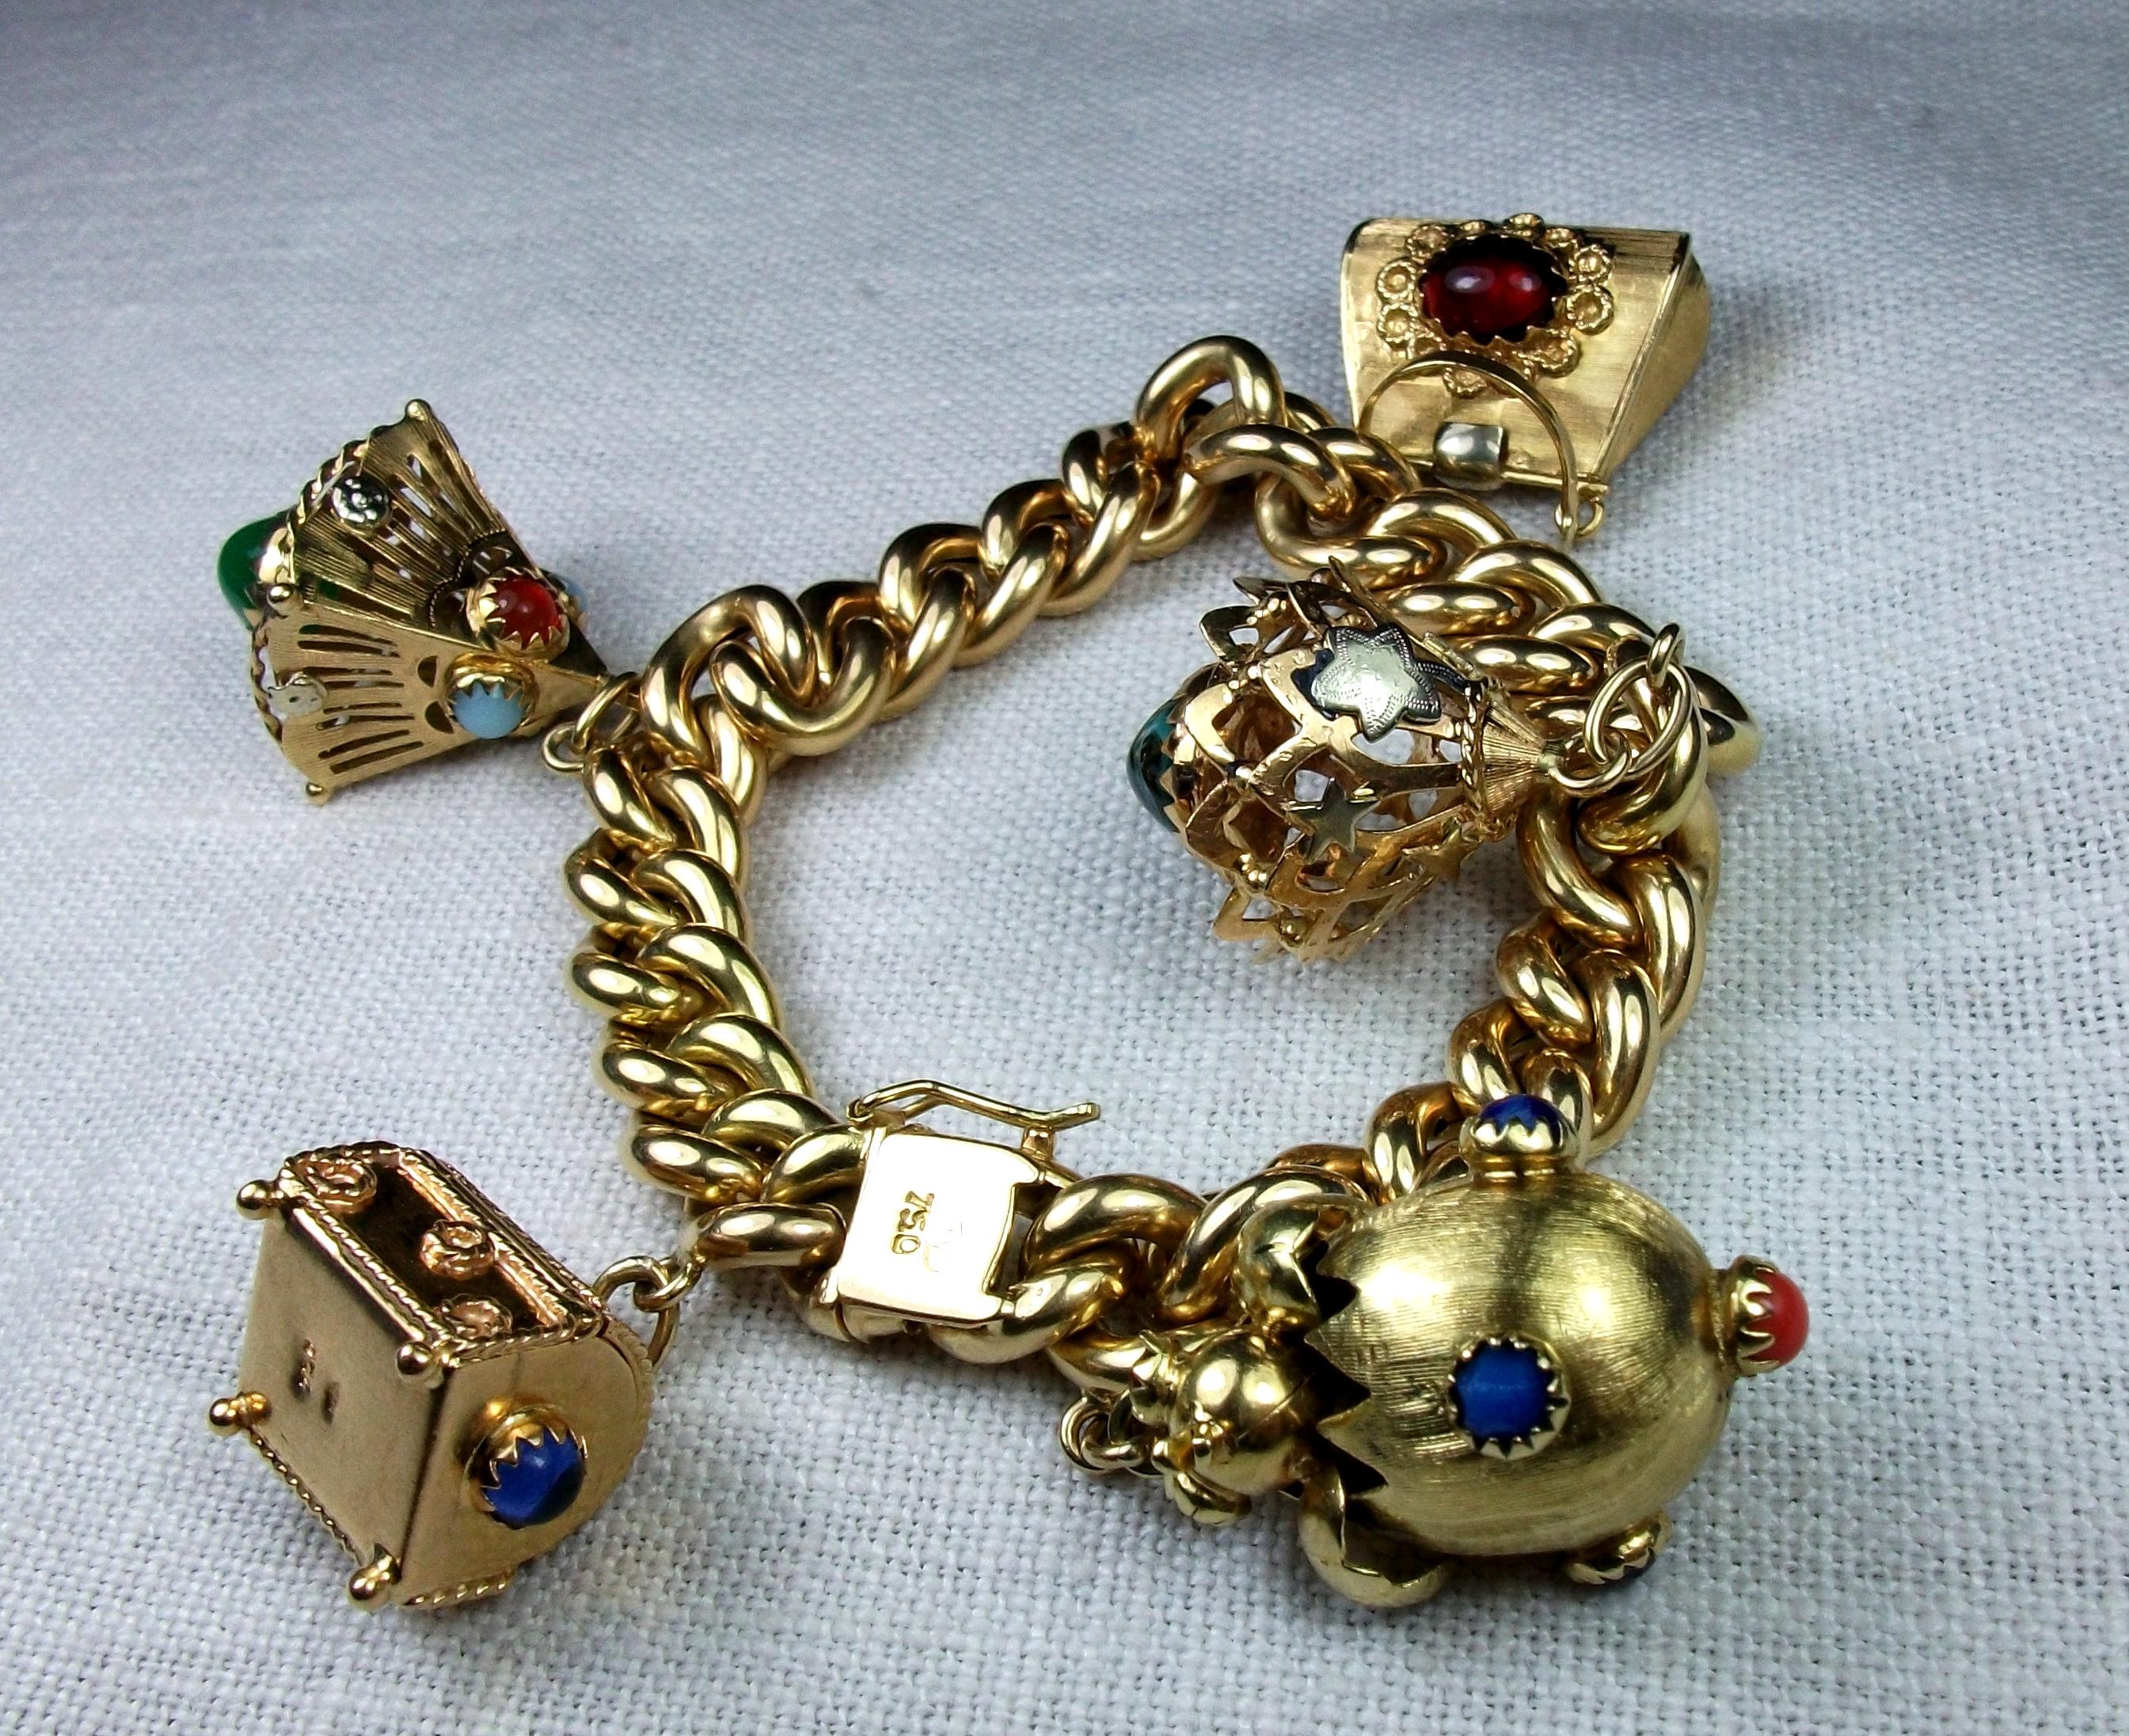 1950s charm bracelet